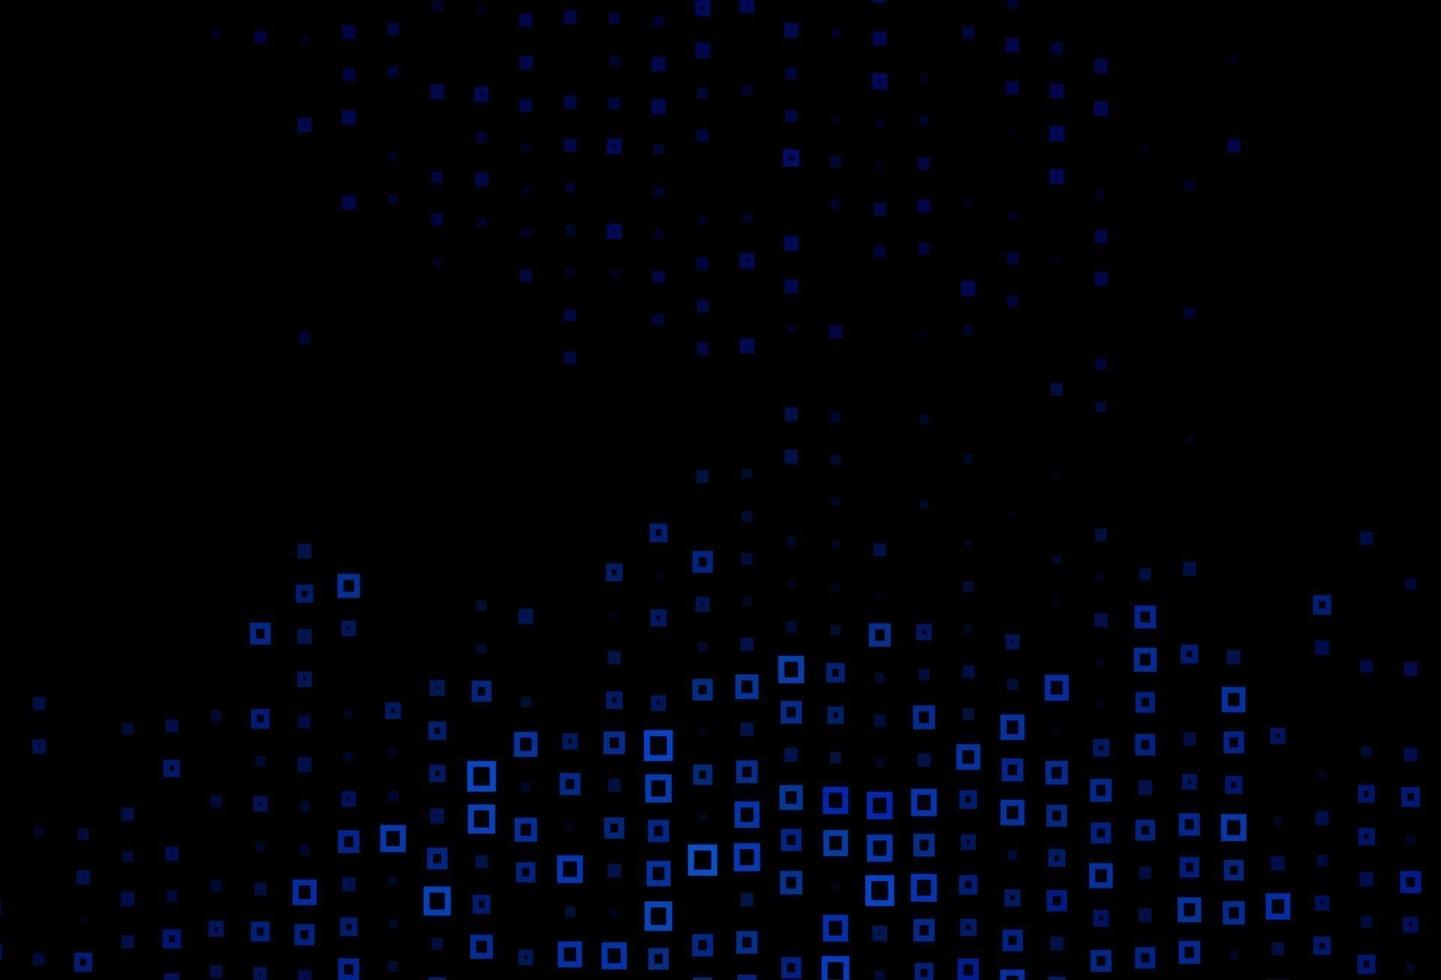 mörkblå vektorbakgrund i polygonal stil. vektor